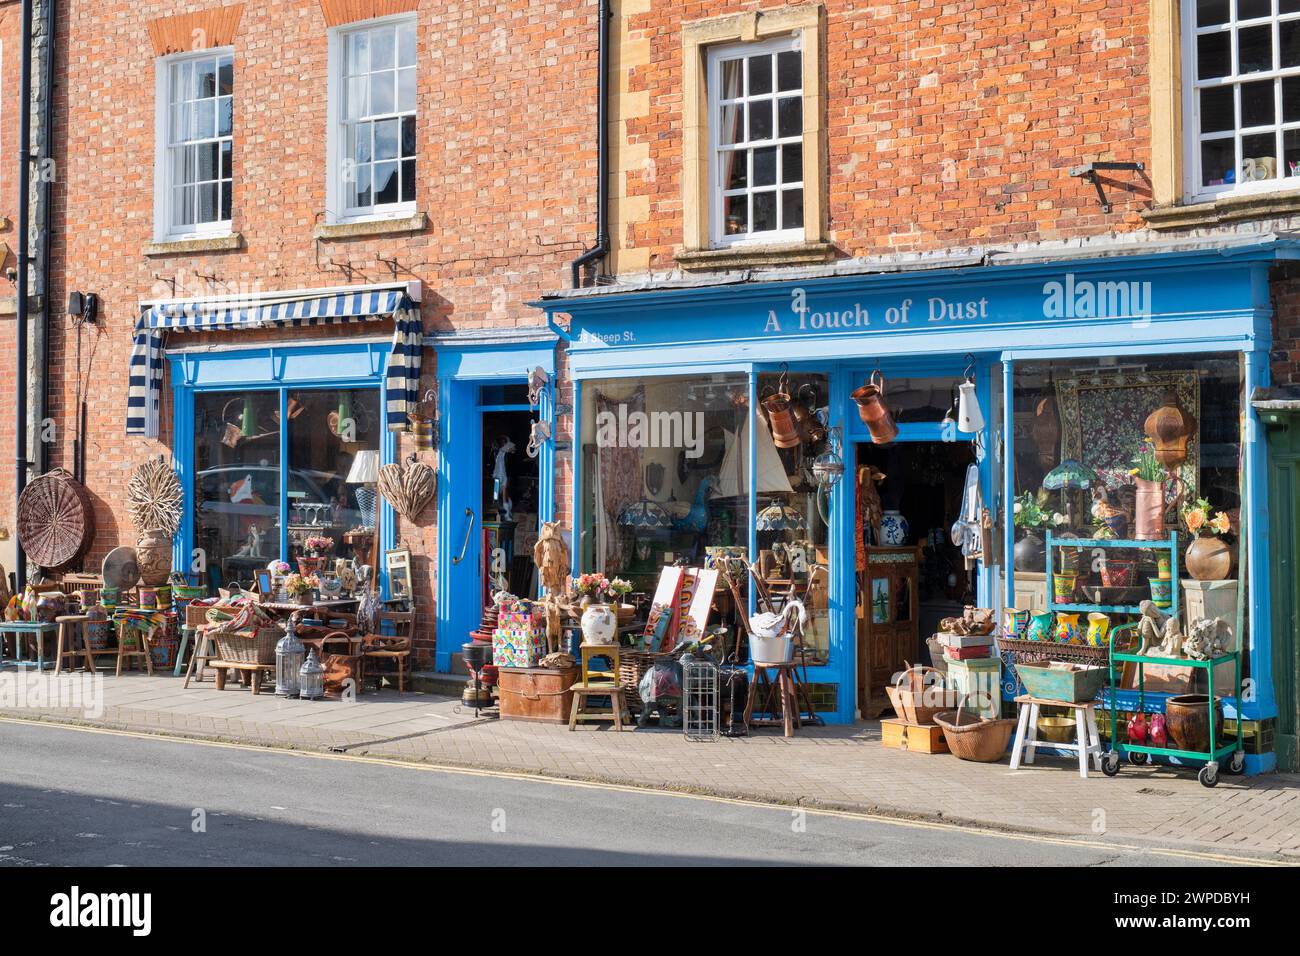 Boutique d'antiquités Touch of Dust, Shipston on Stour, Warwickshire, Angleterre Banque D'Images